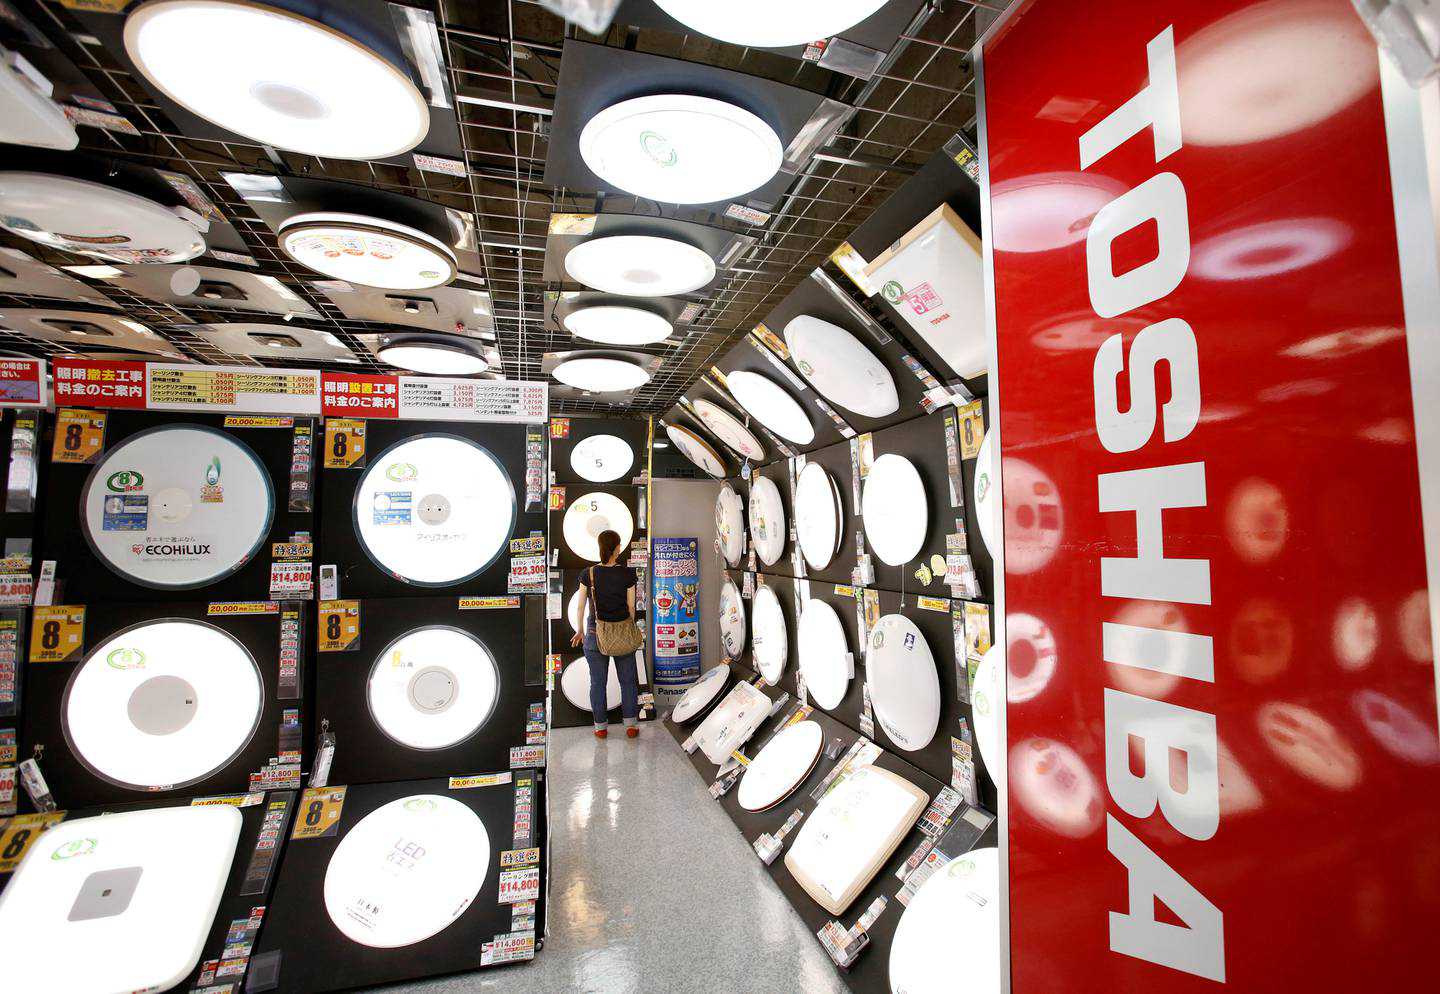 Toshiba abandons three-way split amid shareholder pressure